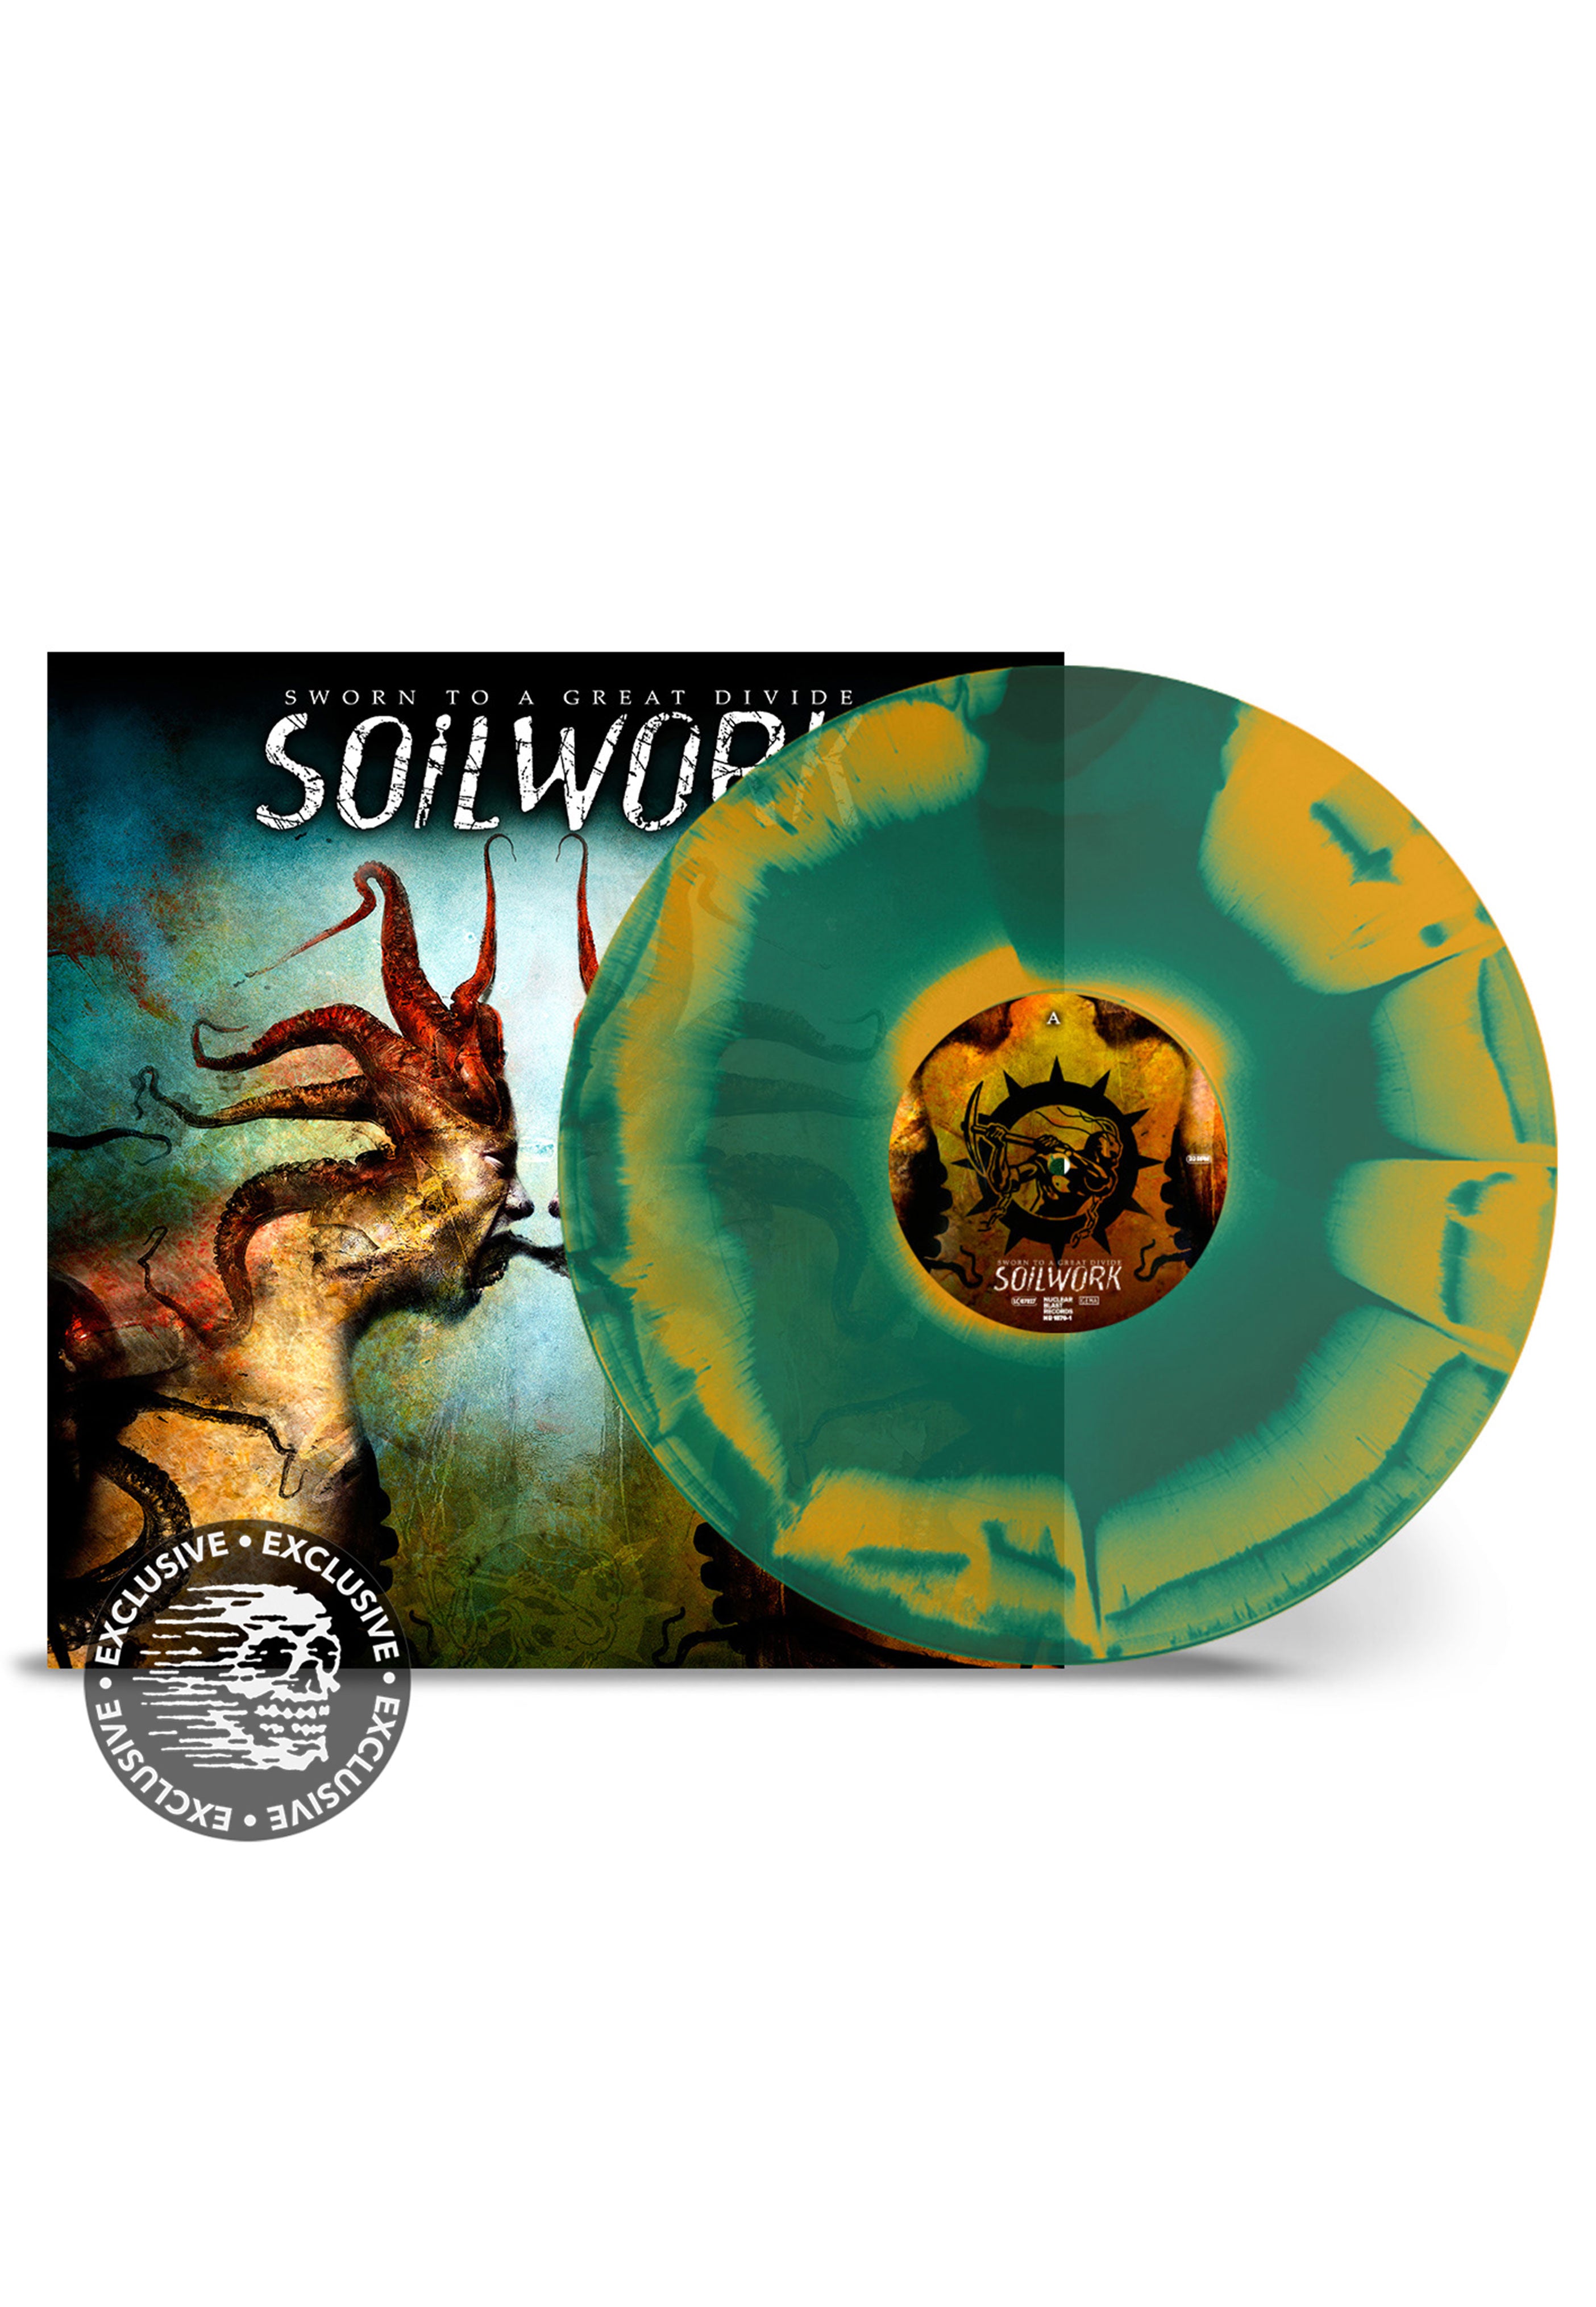 Soilwork - Sworn To A Great Divide Ltd. Orange/Green Sunburst - Colored Vinyl